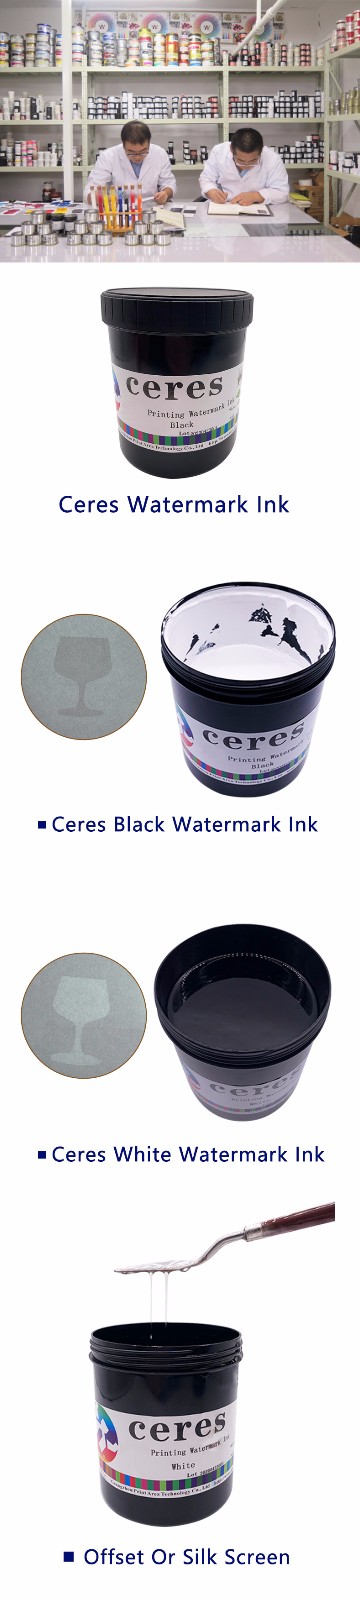 Ceres watermark ink